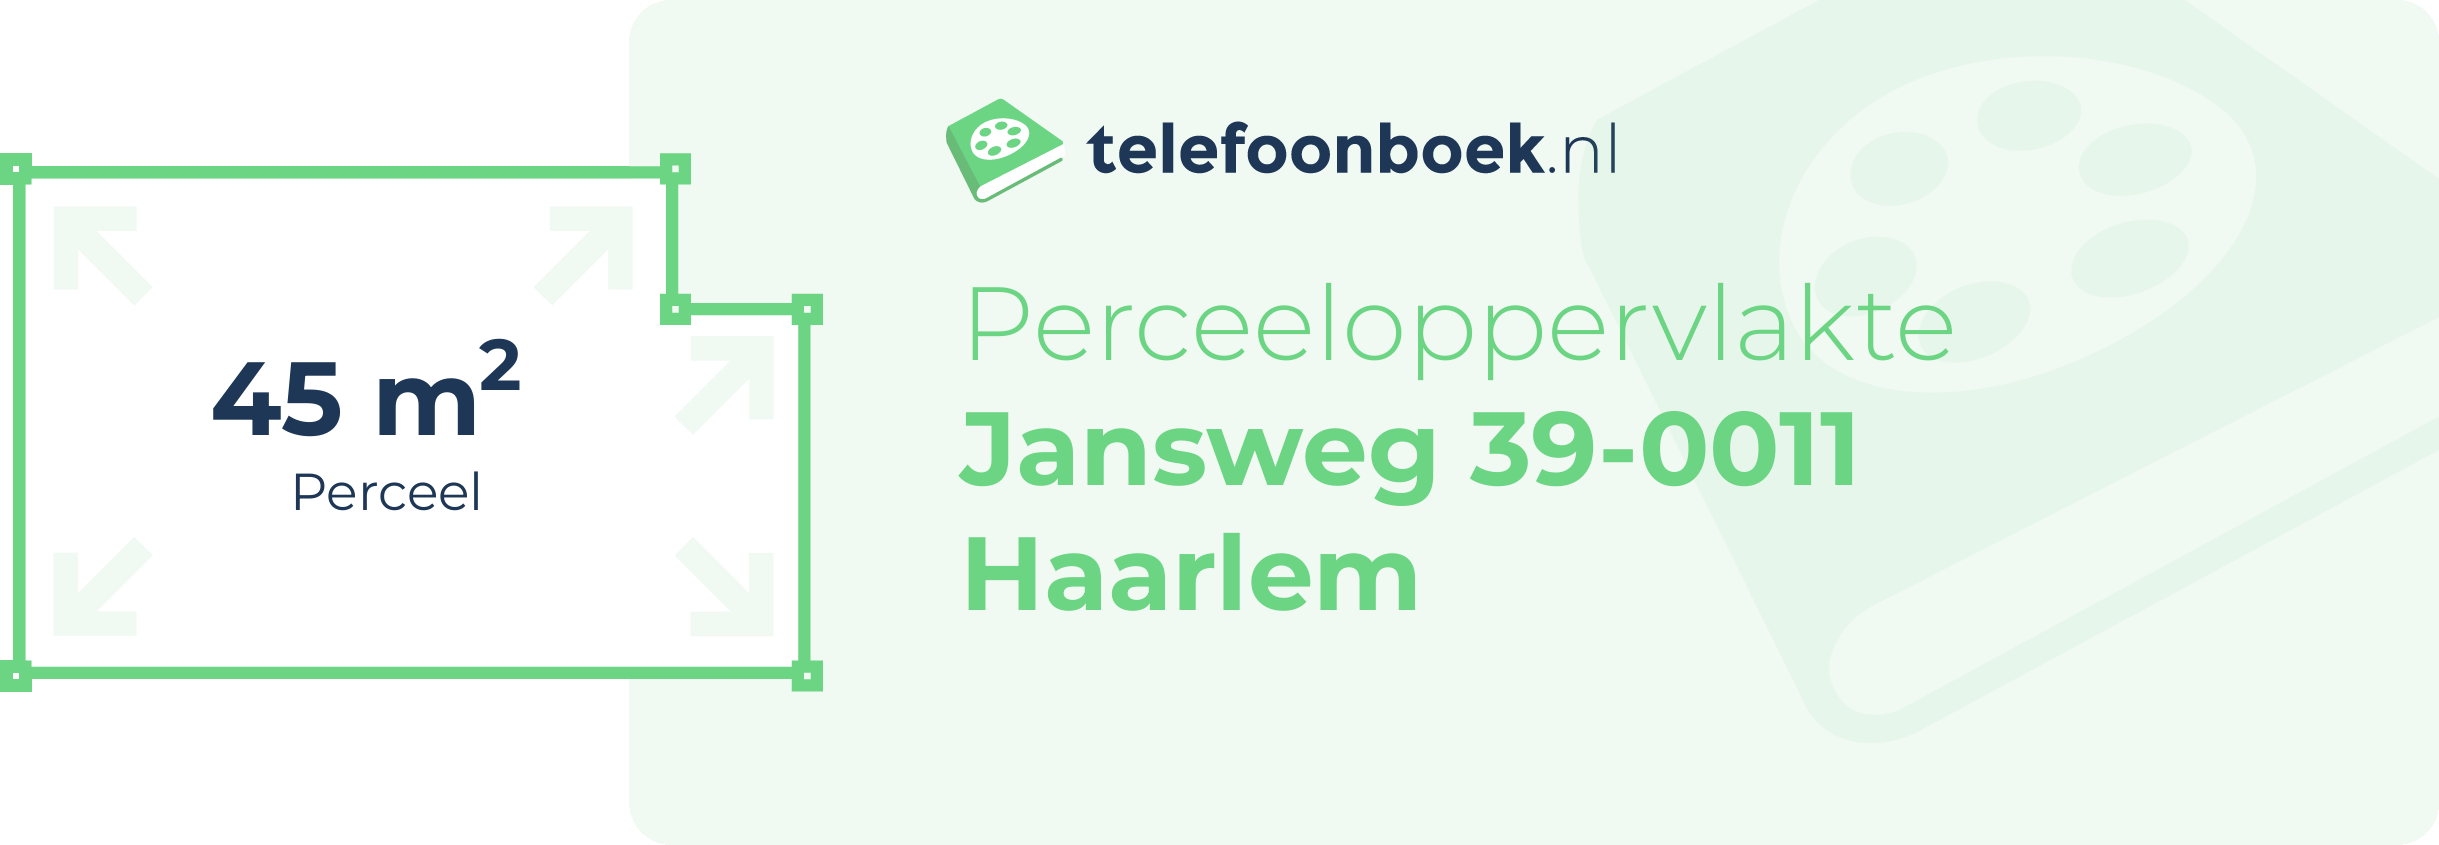 Perceeloppervlakte Jansweg 39-0011 Haarlem